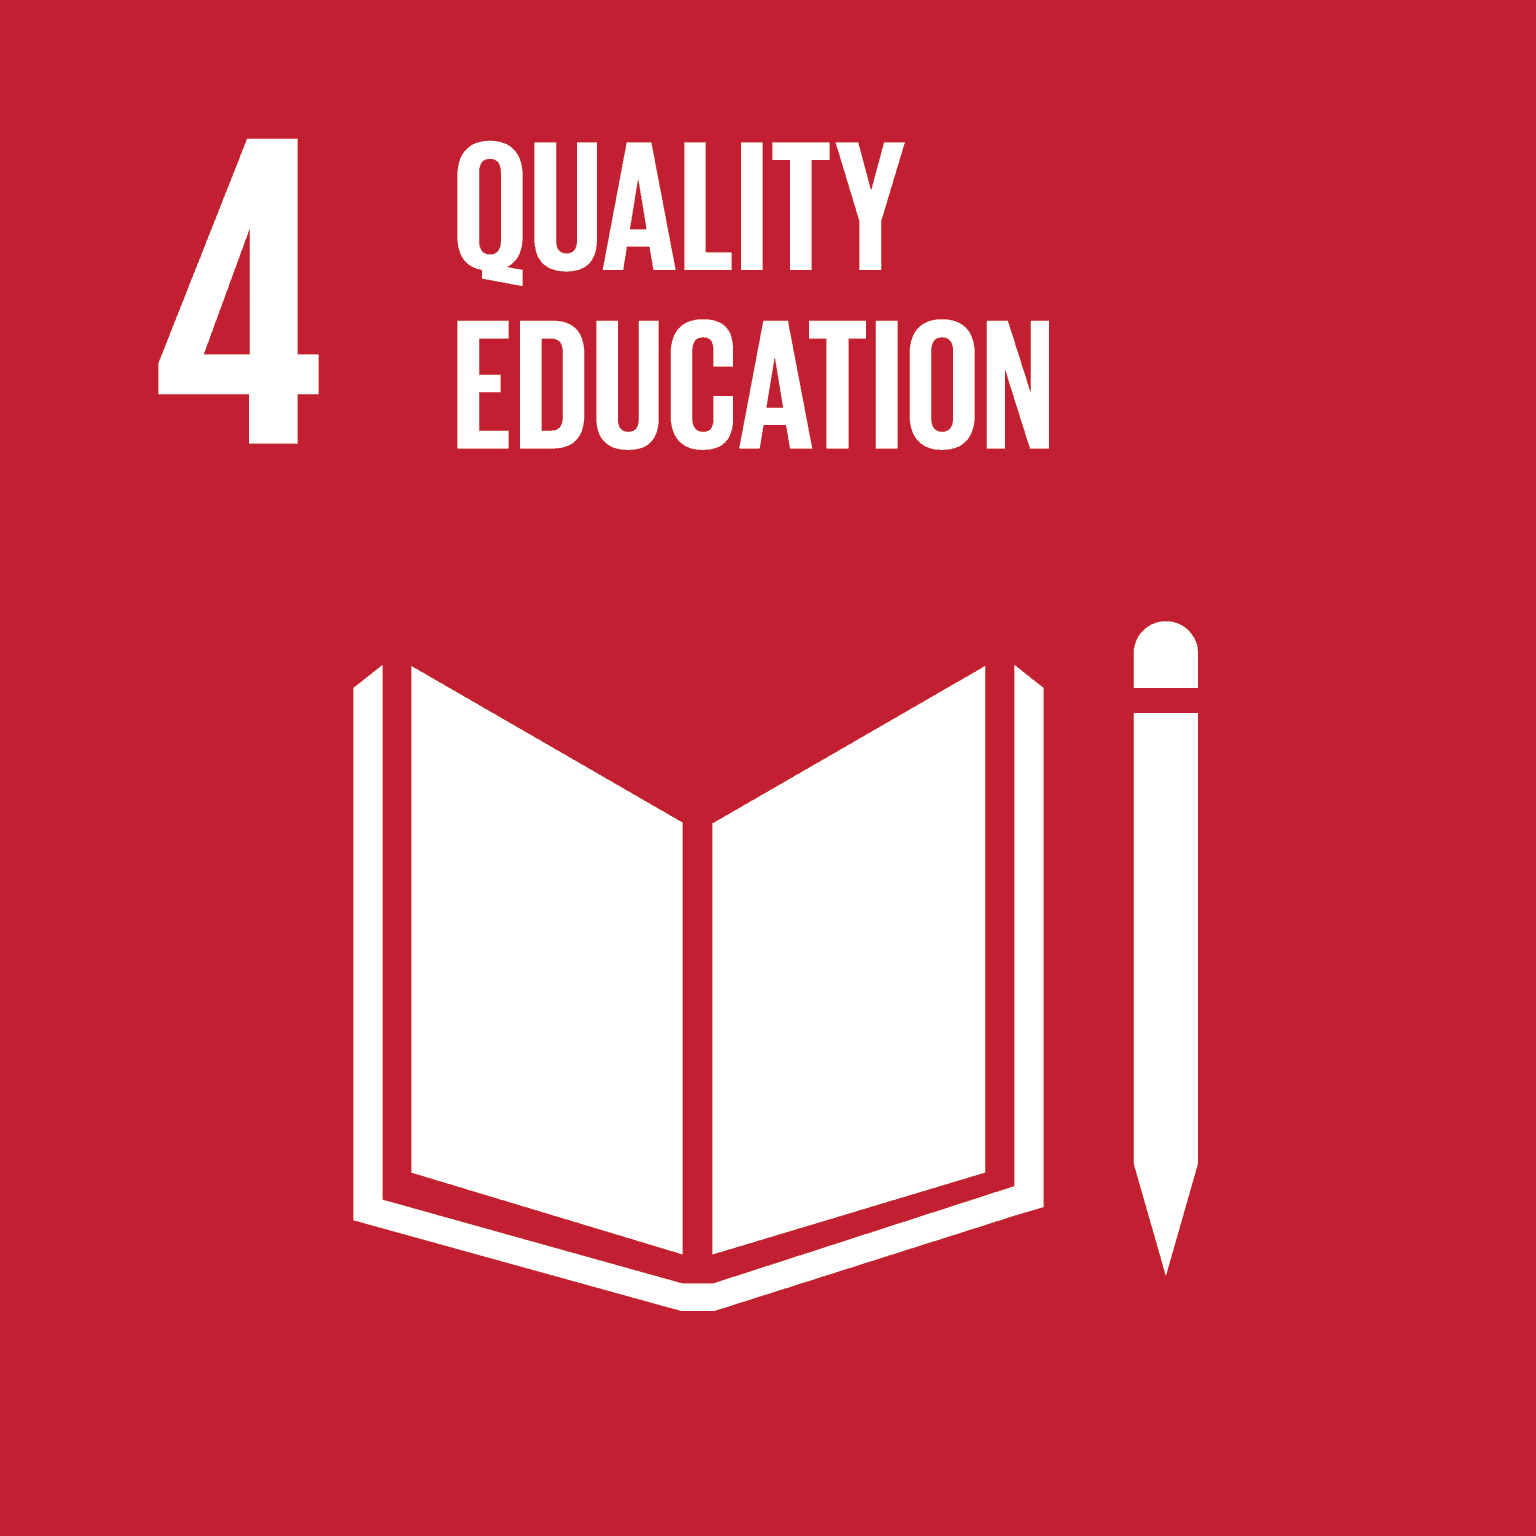 UN  sustainable development goal 4 quality education